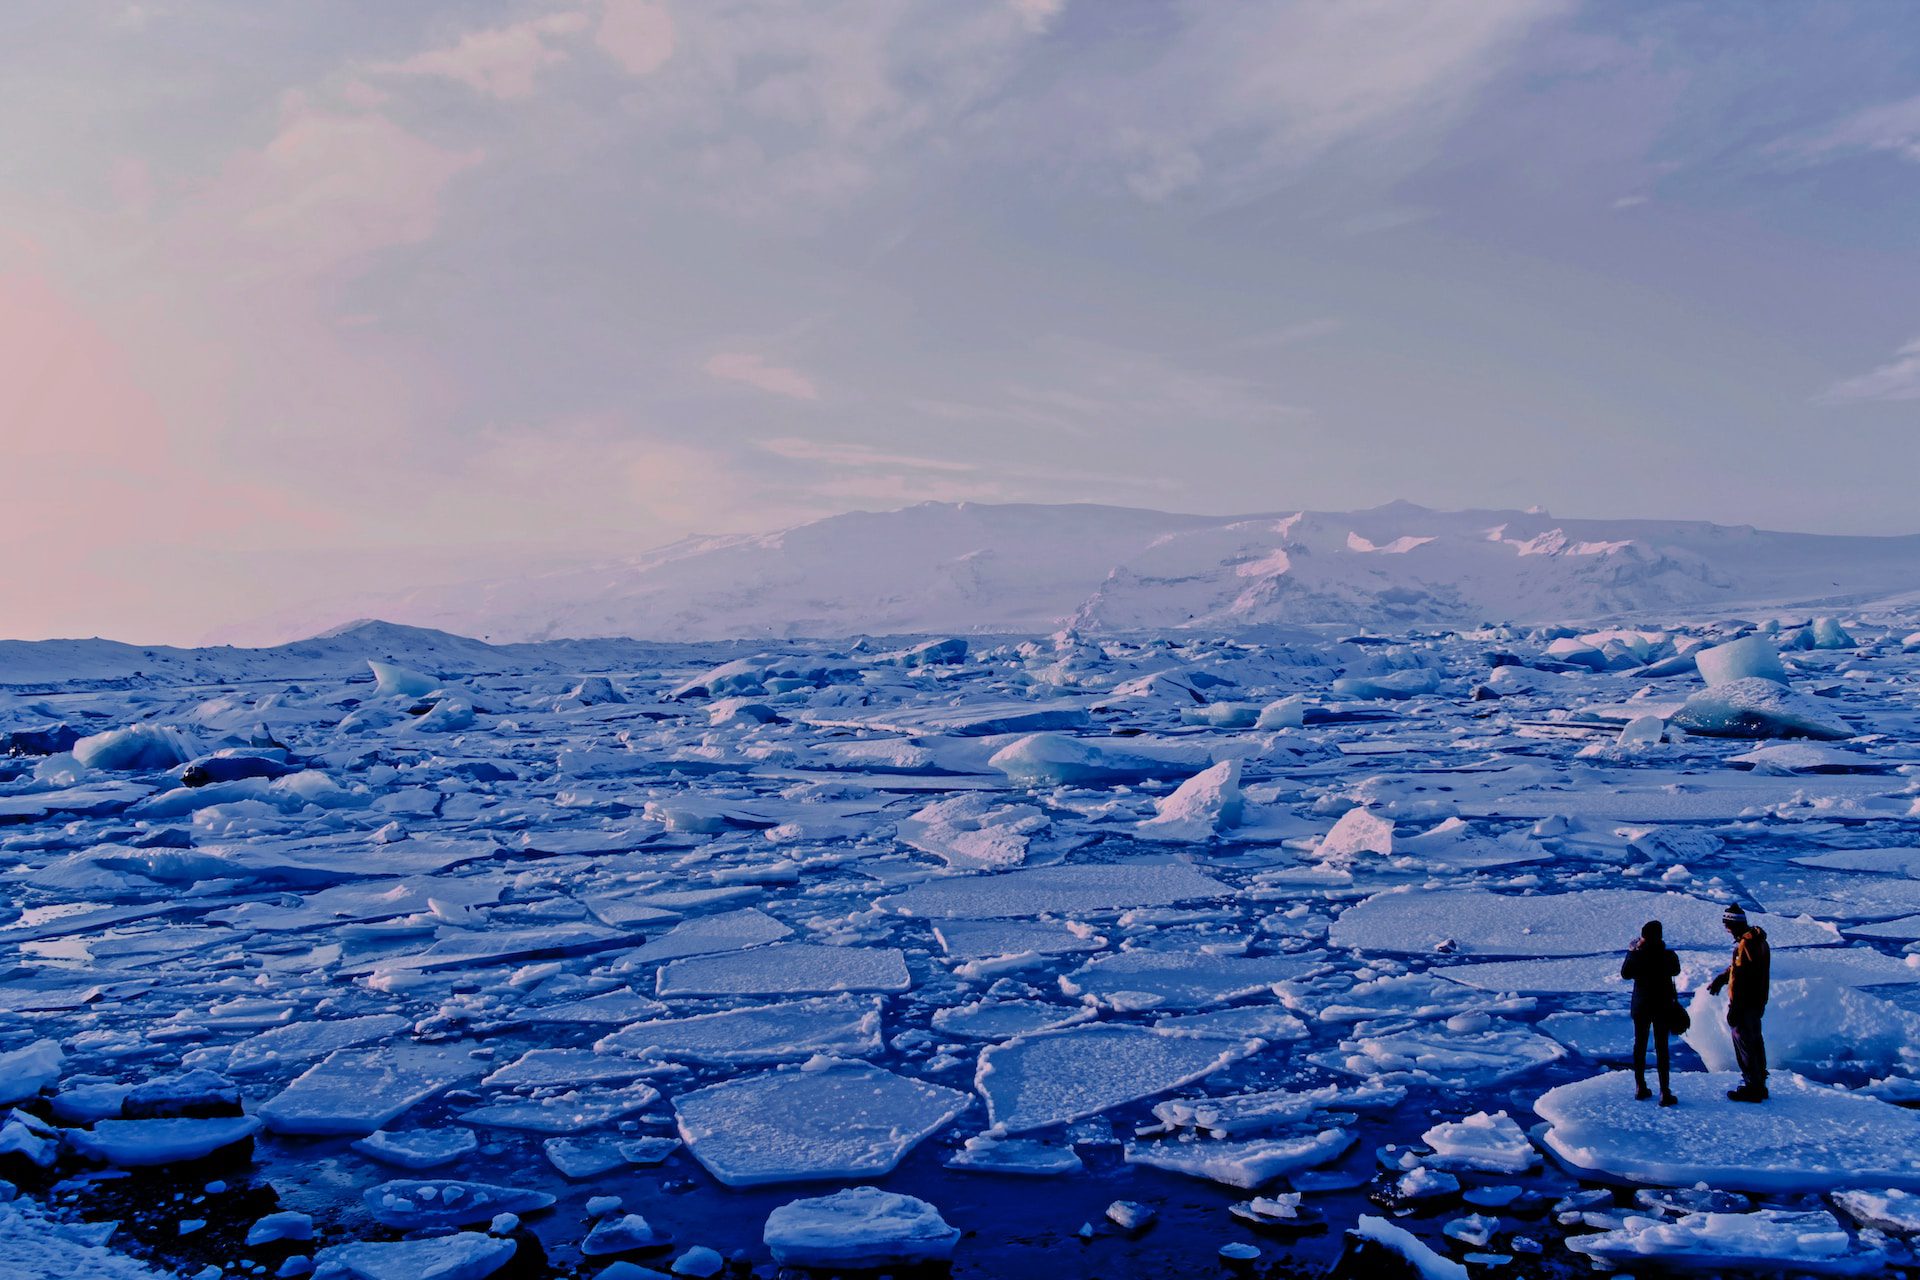 An image of ice glaciers broken apart - global warming